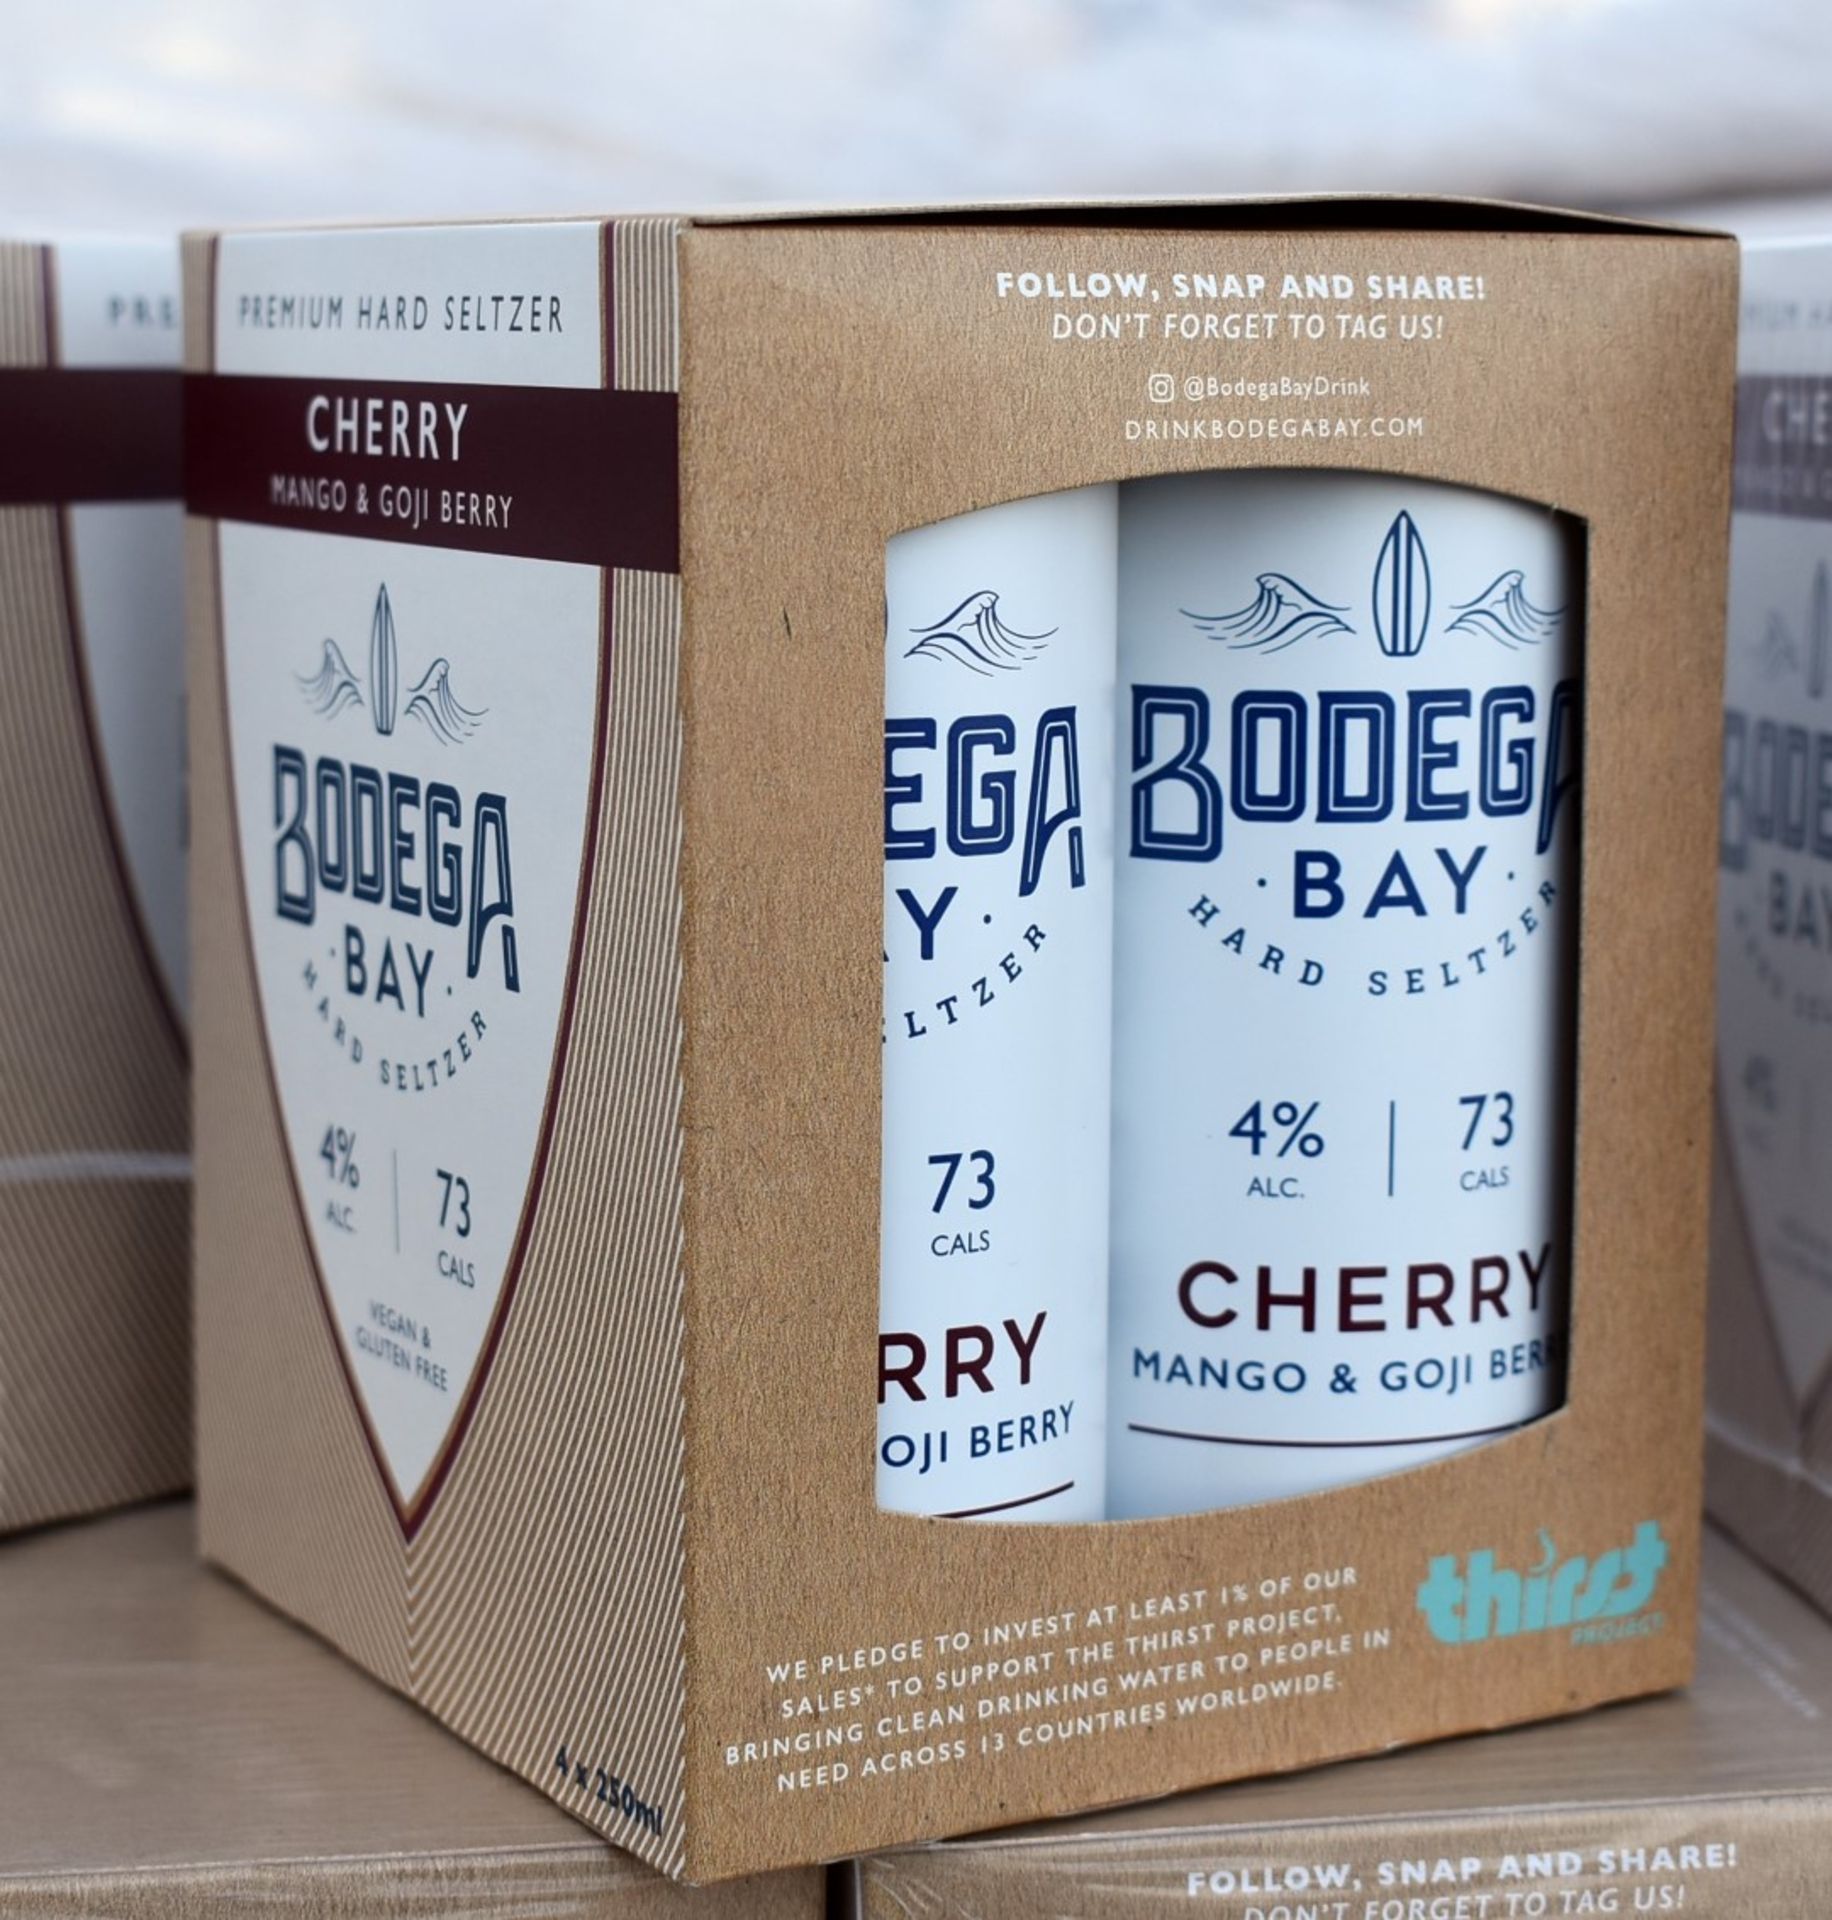 24 x Bodega Bay Hard Seltzer 250ml Alcoholic Sparkling Water Drinks - Cherry Mango & Goji Berry - Image 4 of 7